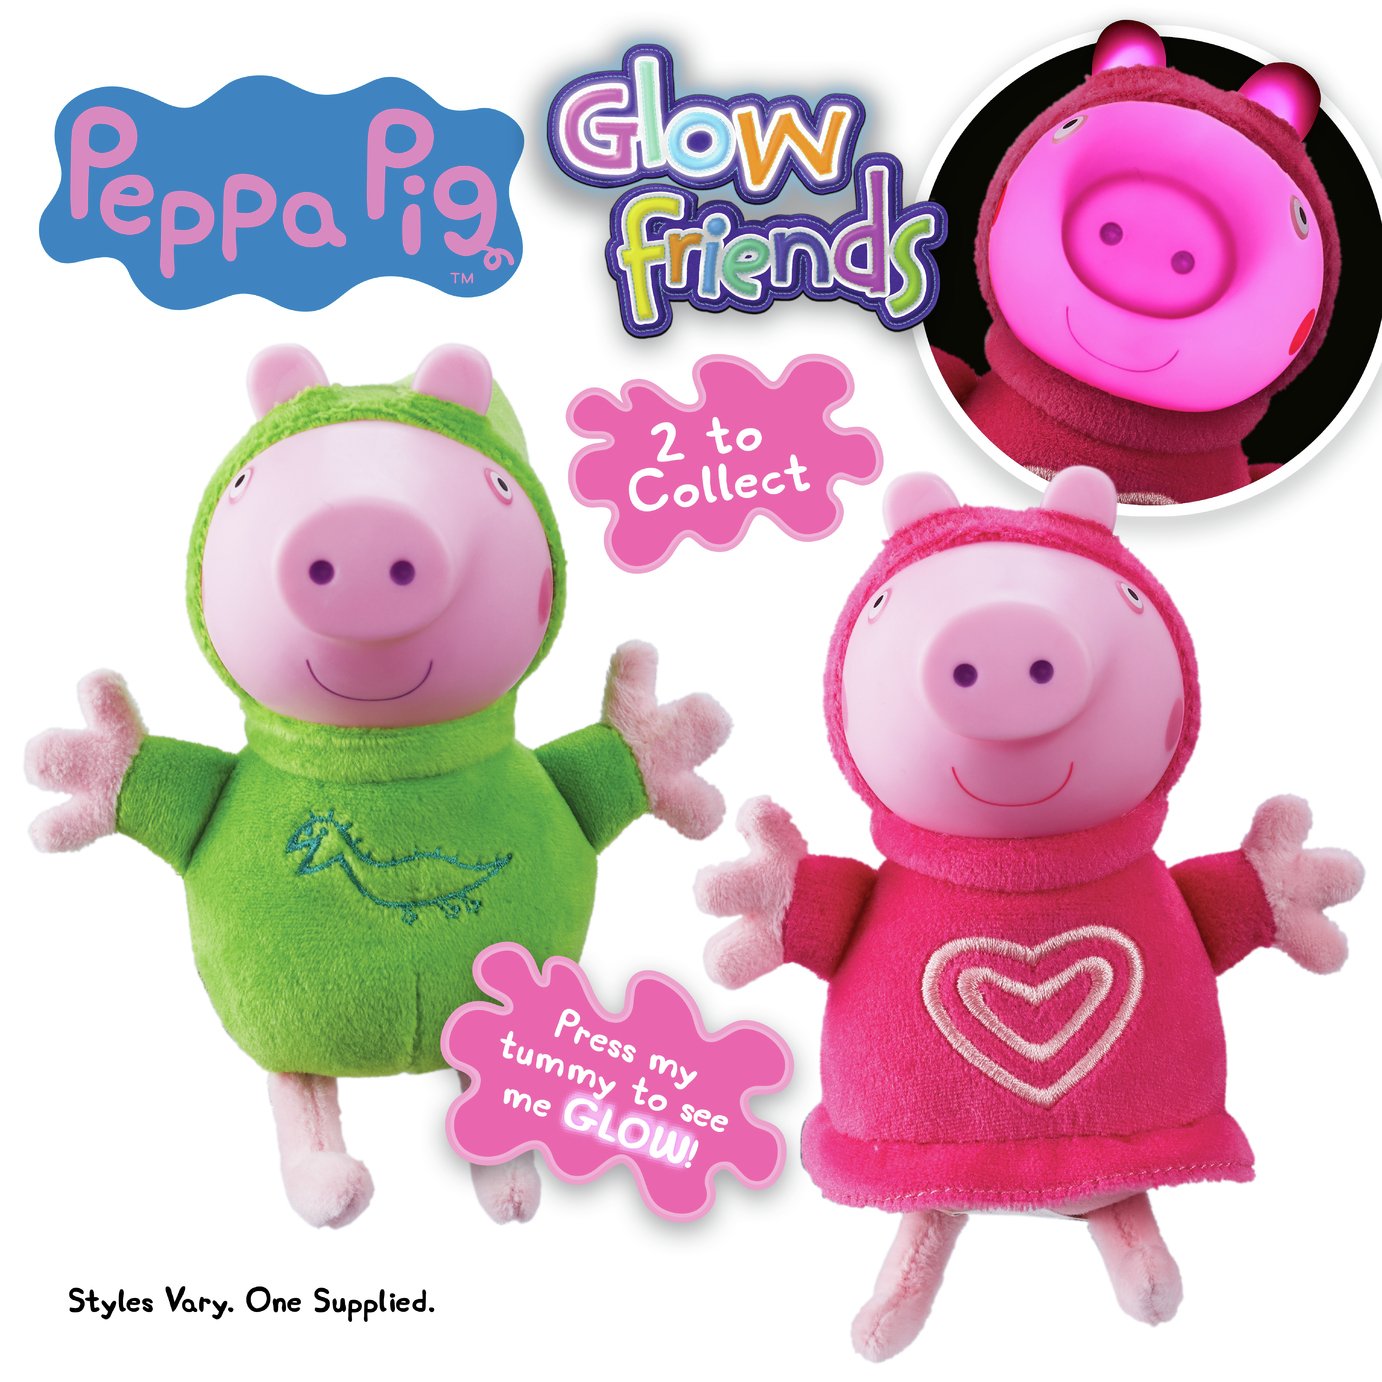 peppa pig glow friends argos